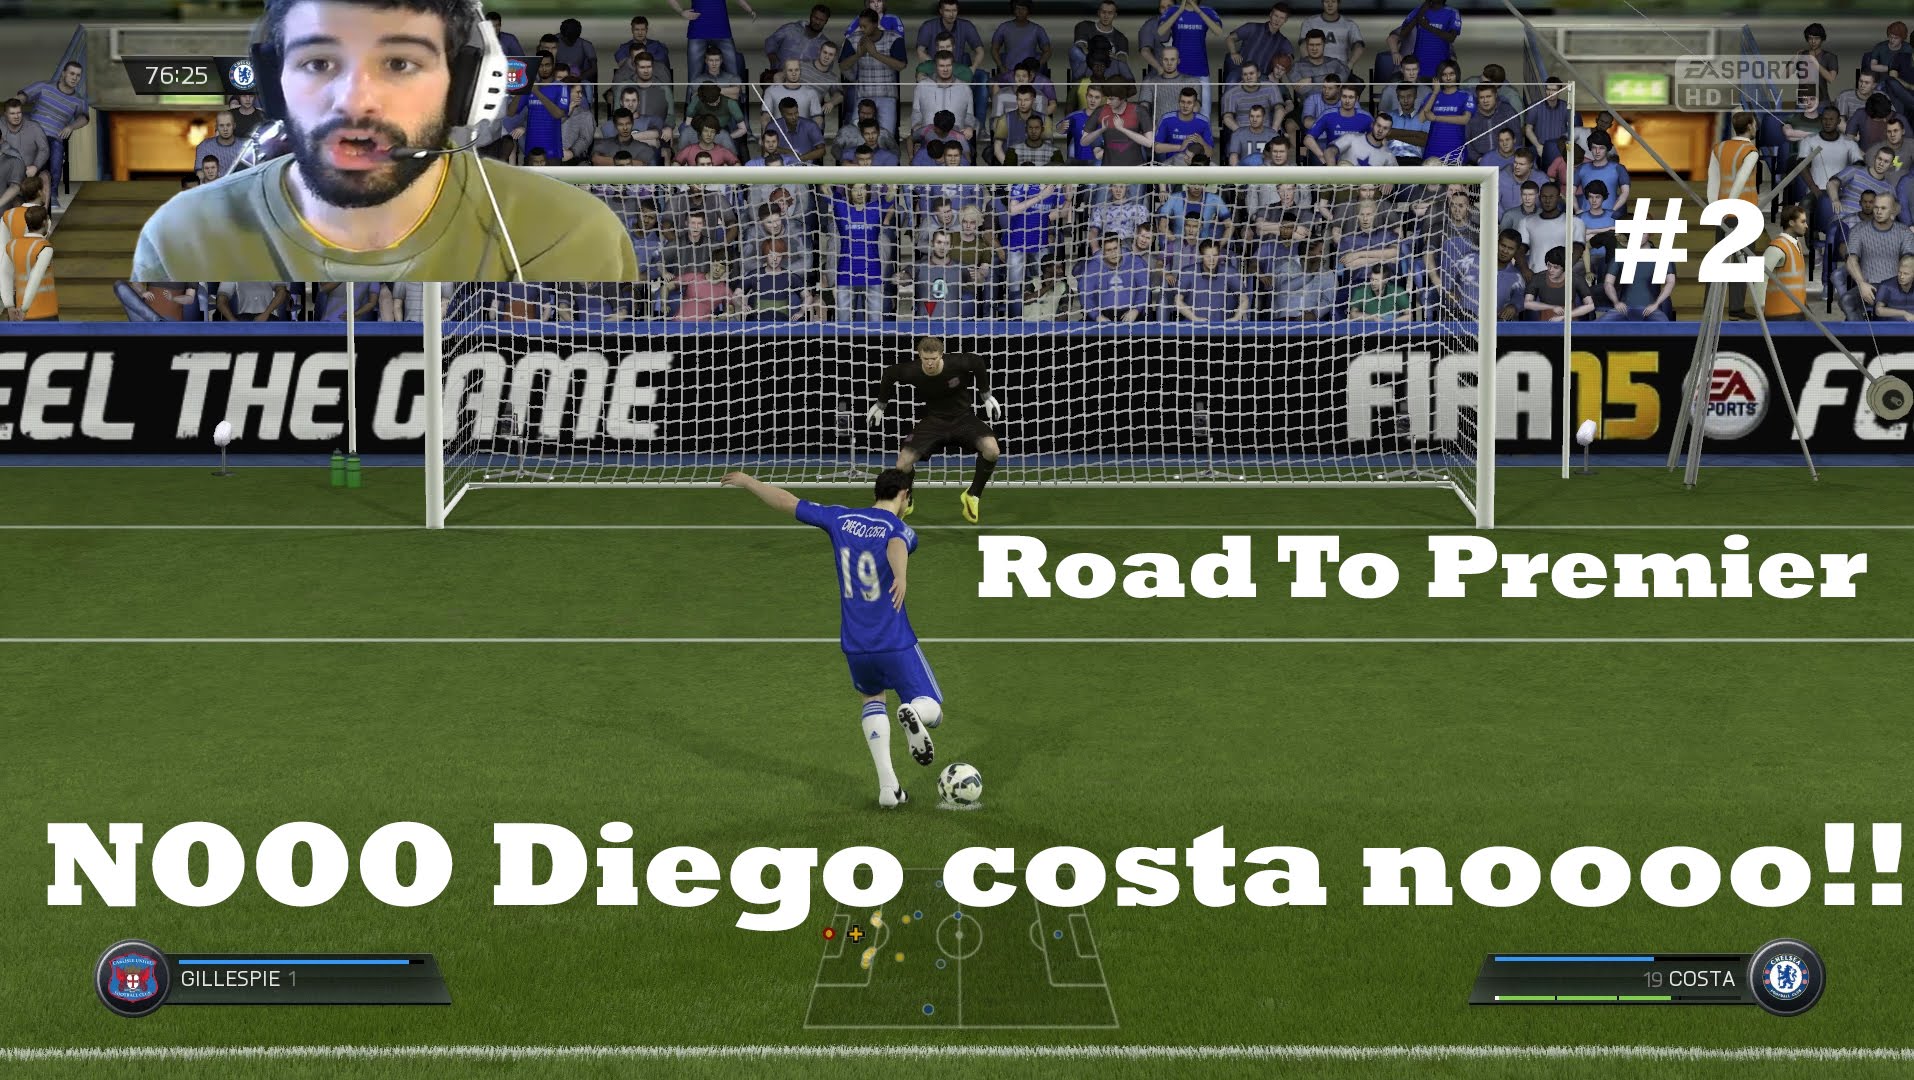 Diego Costa nooooooo!!!!!-Fifa 15 en catala Road to Premier#2 de Un bon Català